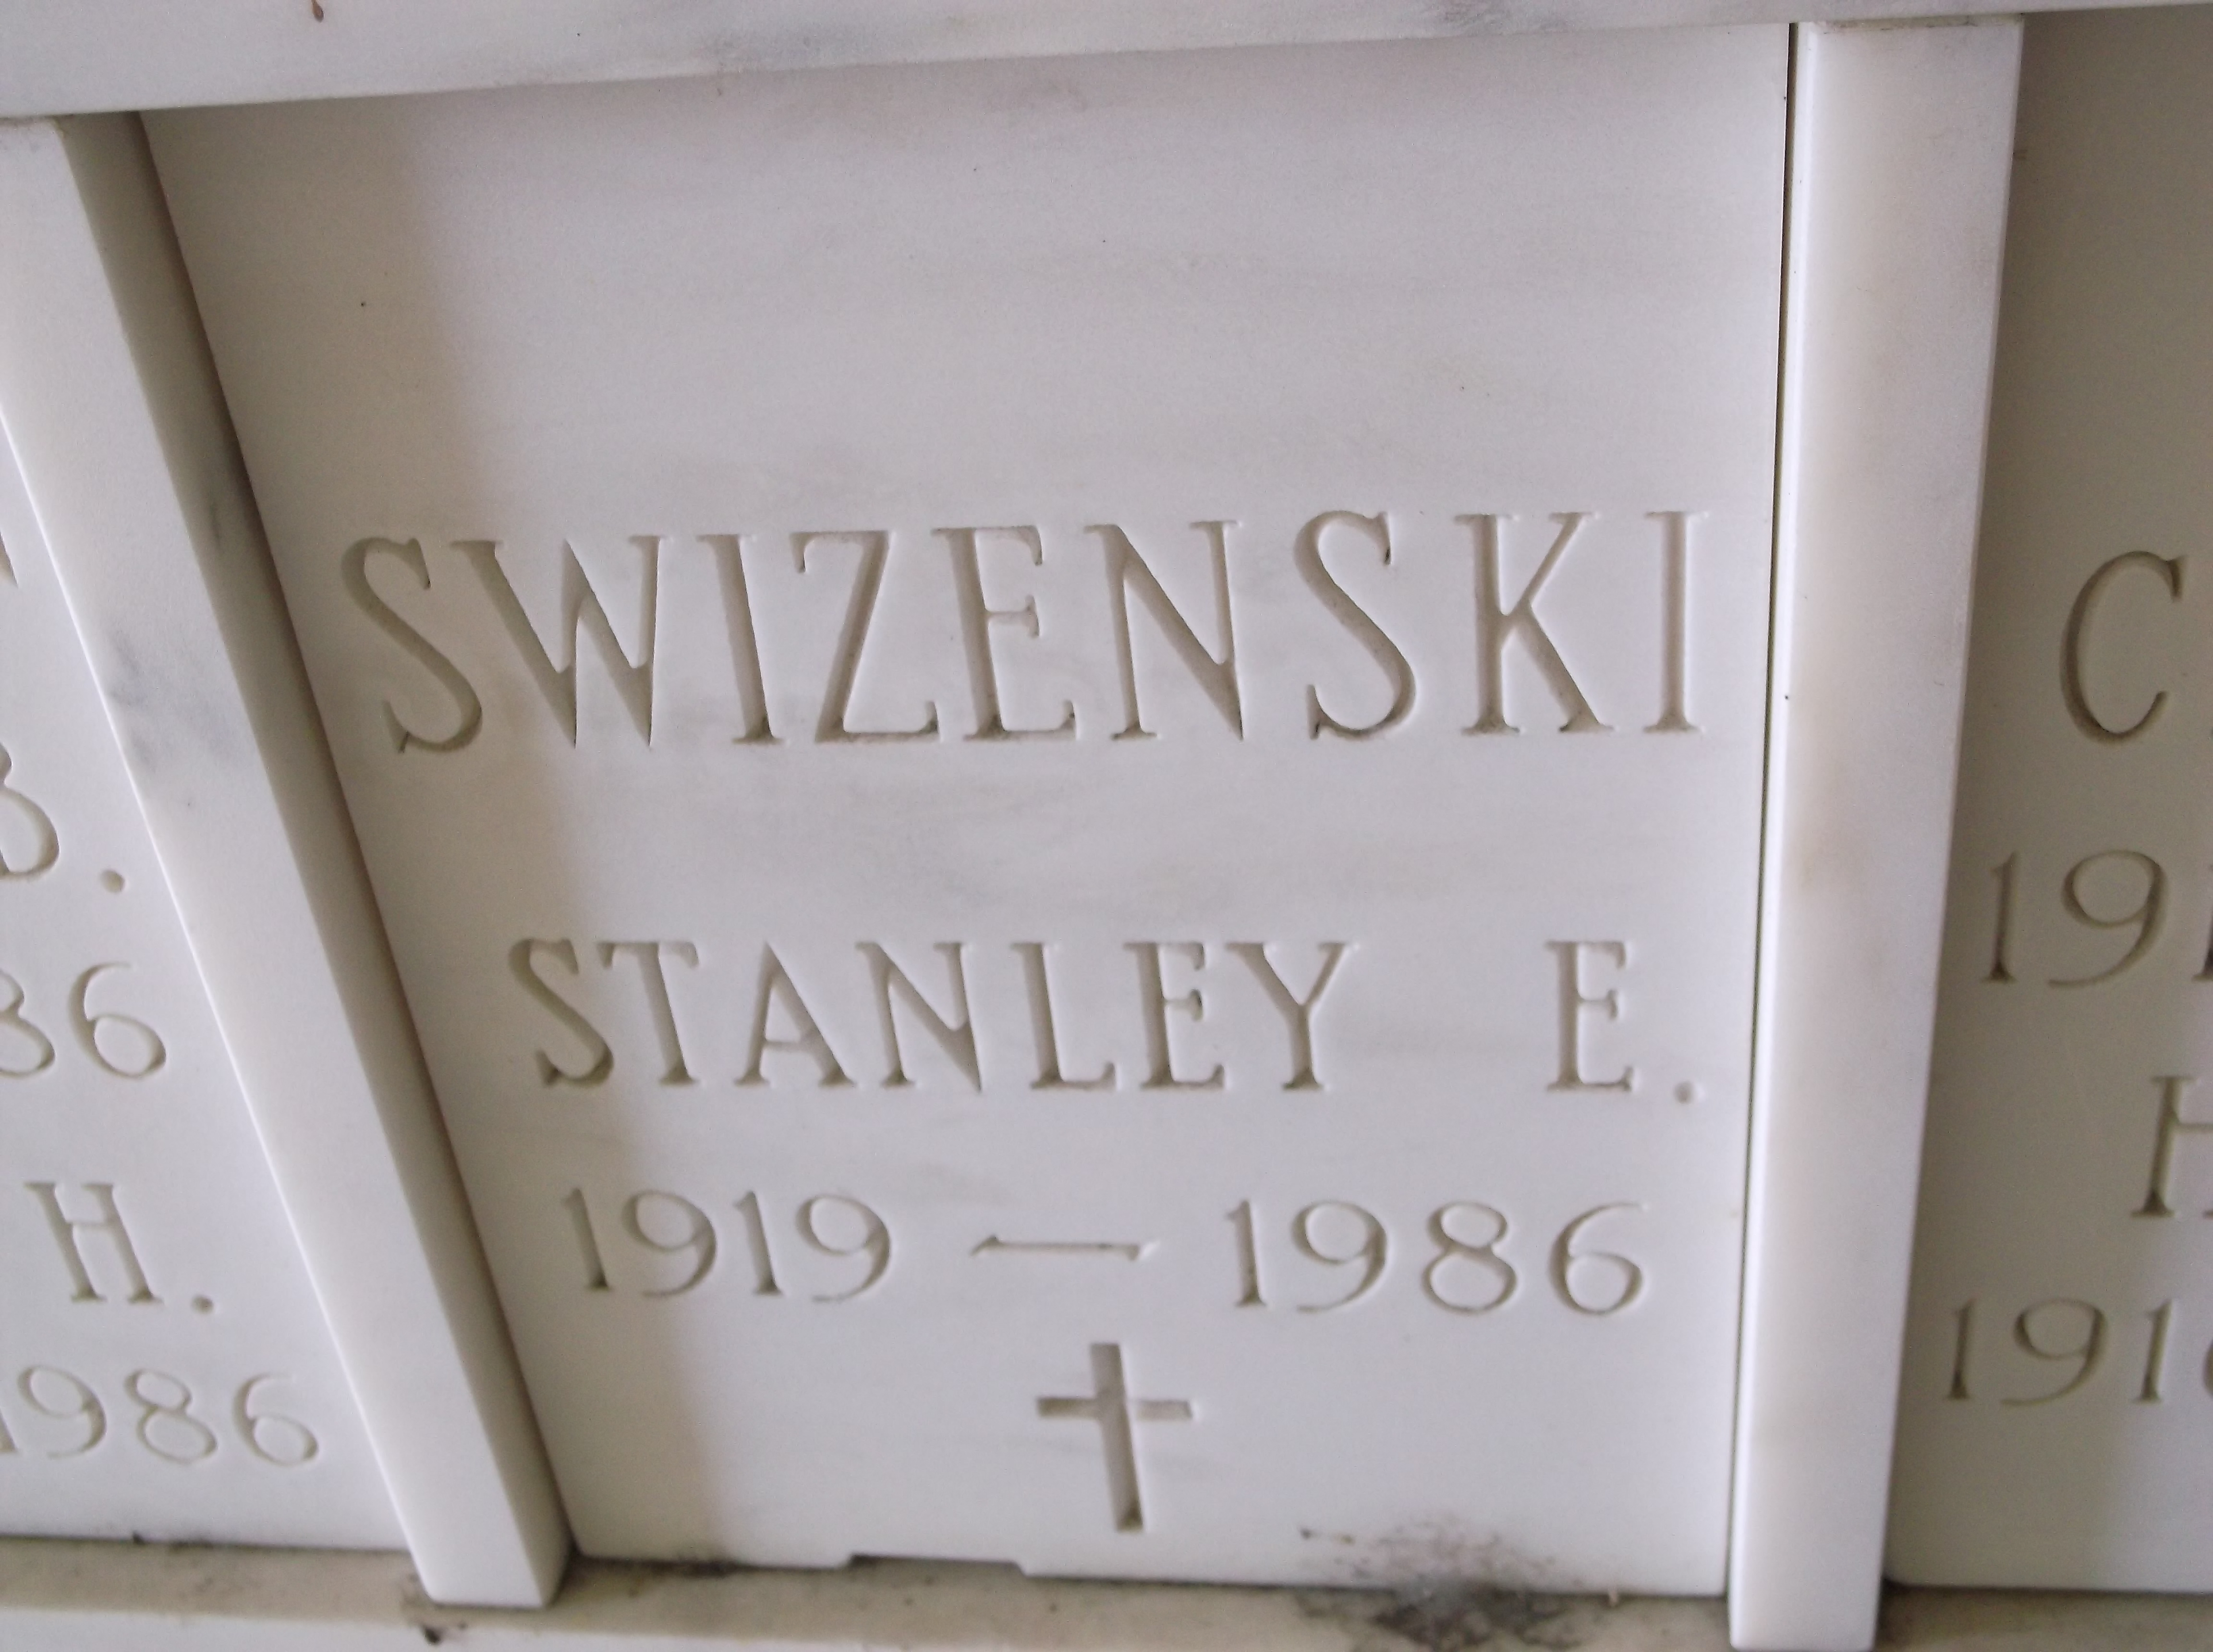 Stanley E Swizenski